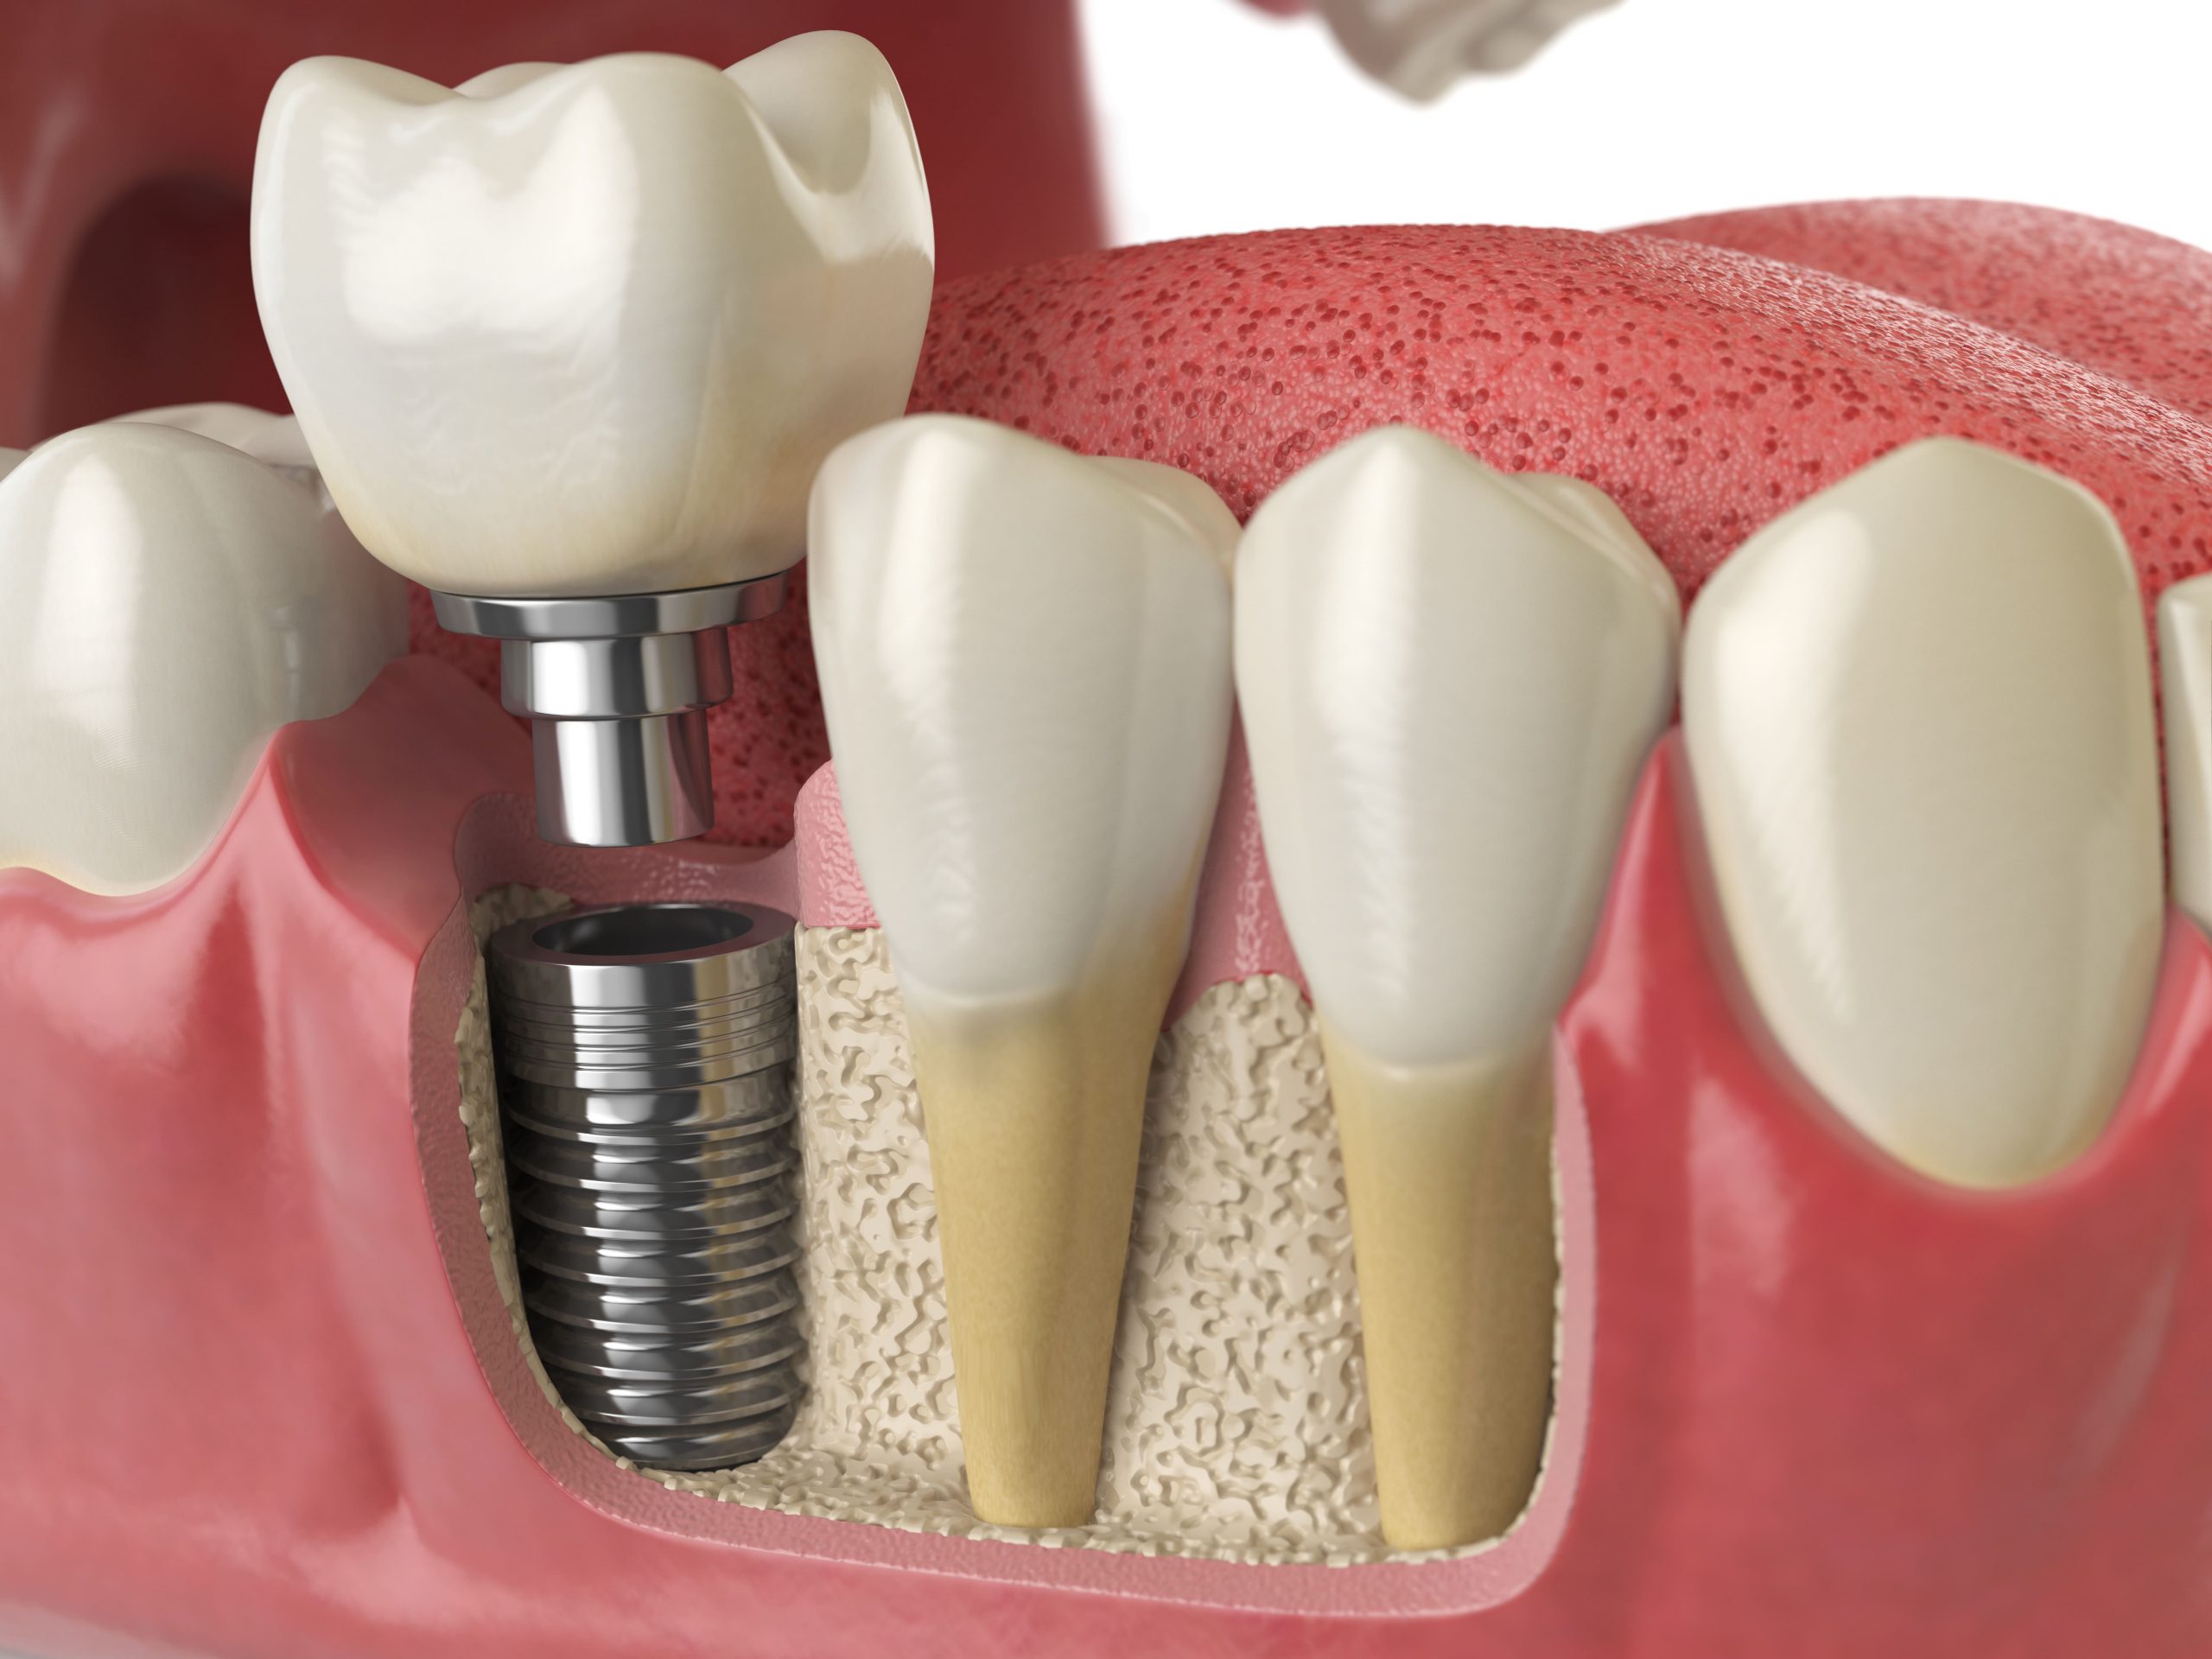 anatomy-of-healthy-teeth-and-tooth-dental-implant-2021-08-26-16-56-57-utc (1)